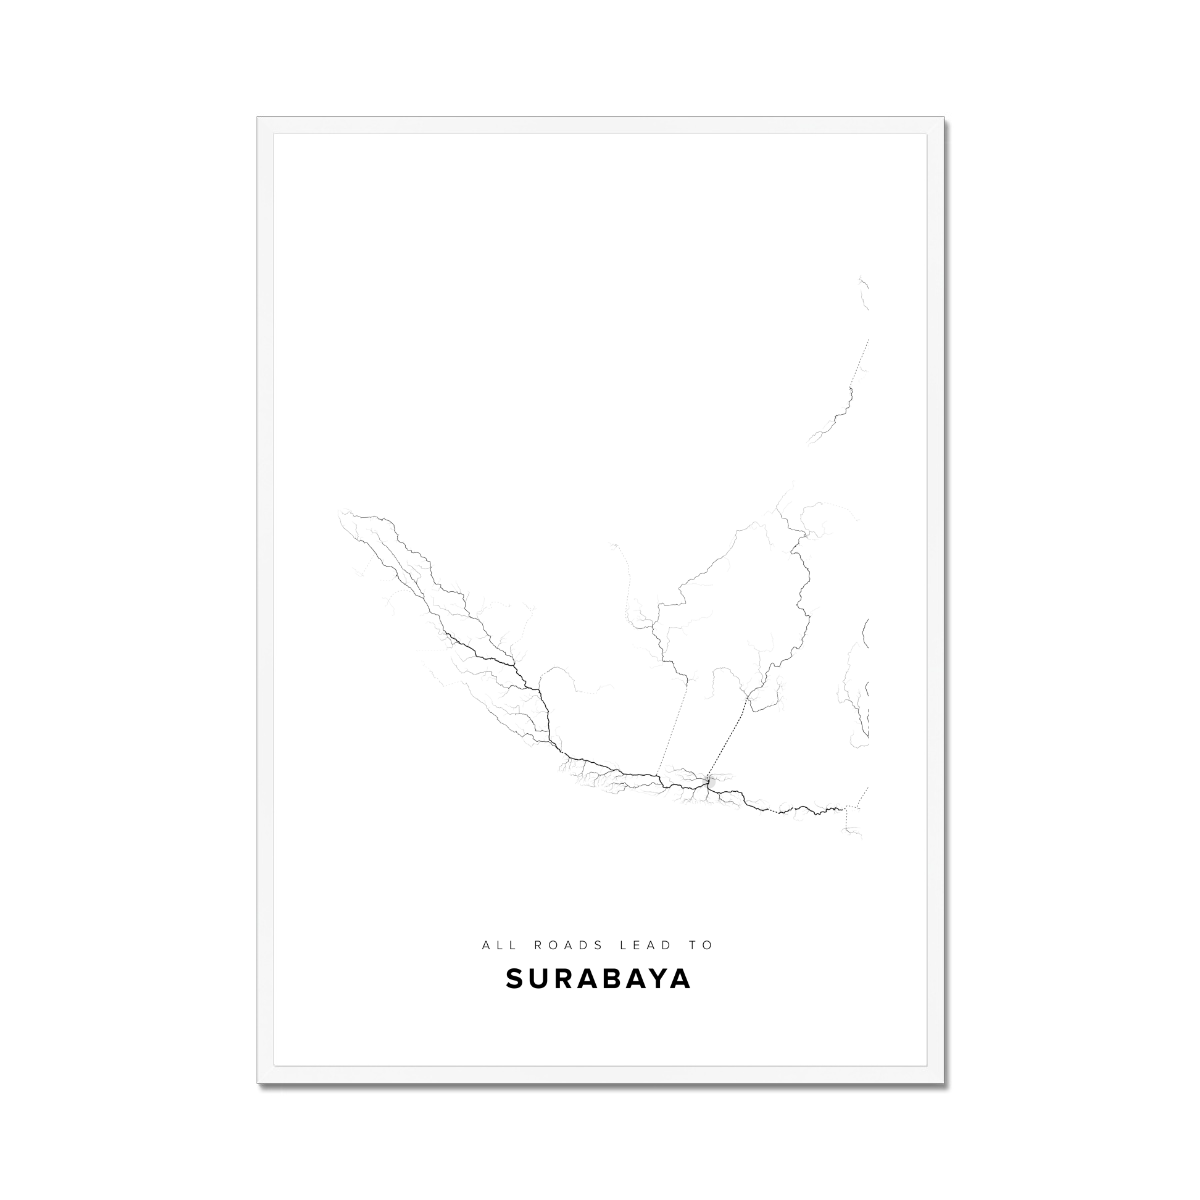 All roads lead to Surabaya (Indonesia) Fine Art Map Print